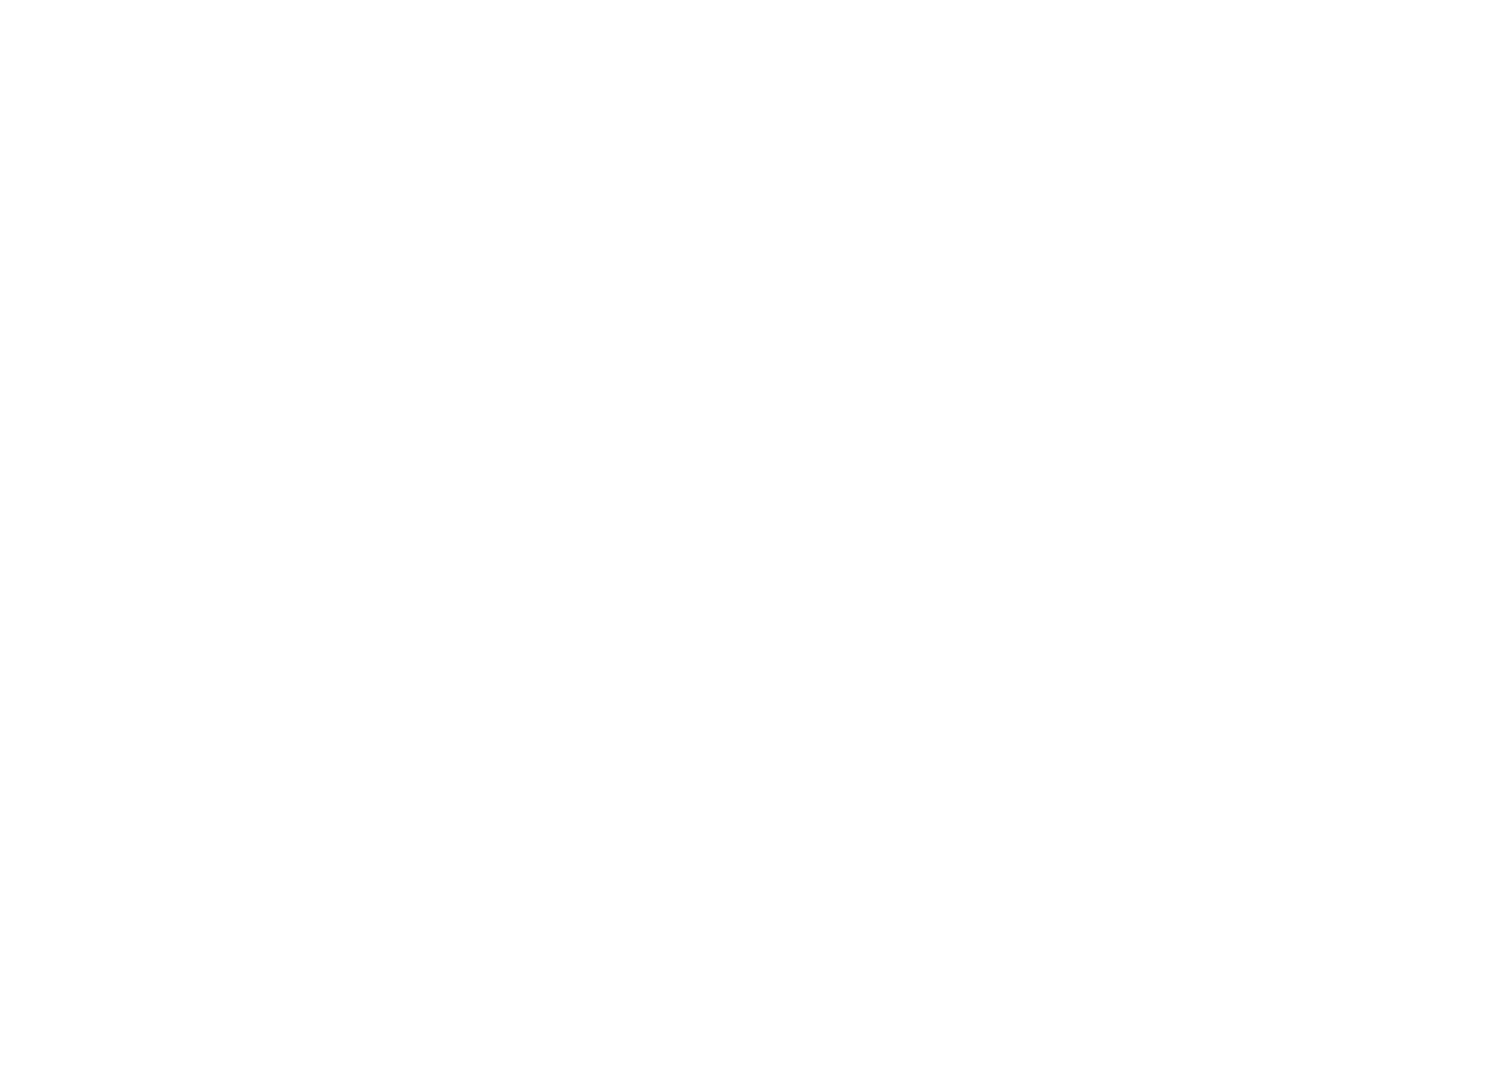 MICHAEL McARTHUR